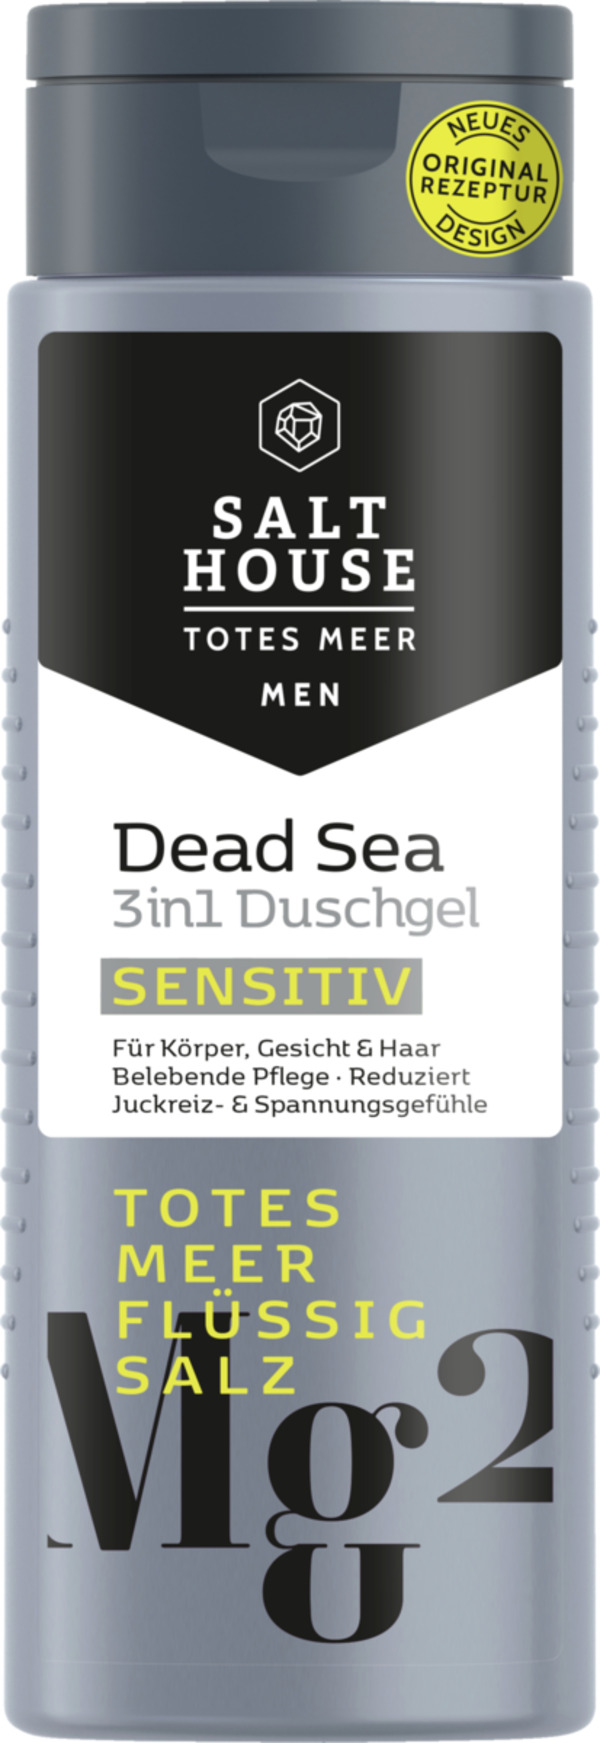 Bild 1 von Salthouse Totes Meer Körper, Gesicht & Haar Duschgel sensitiv